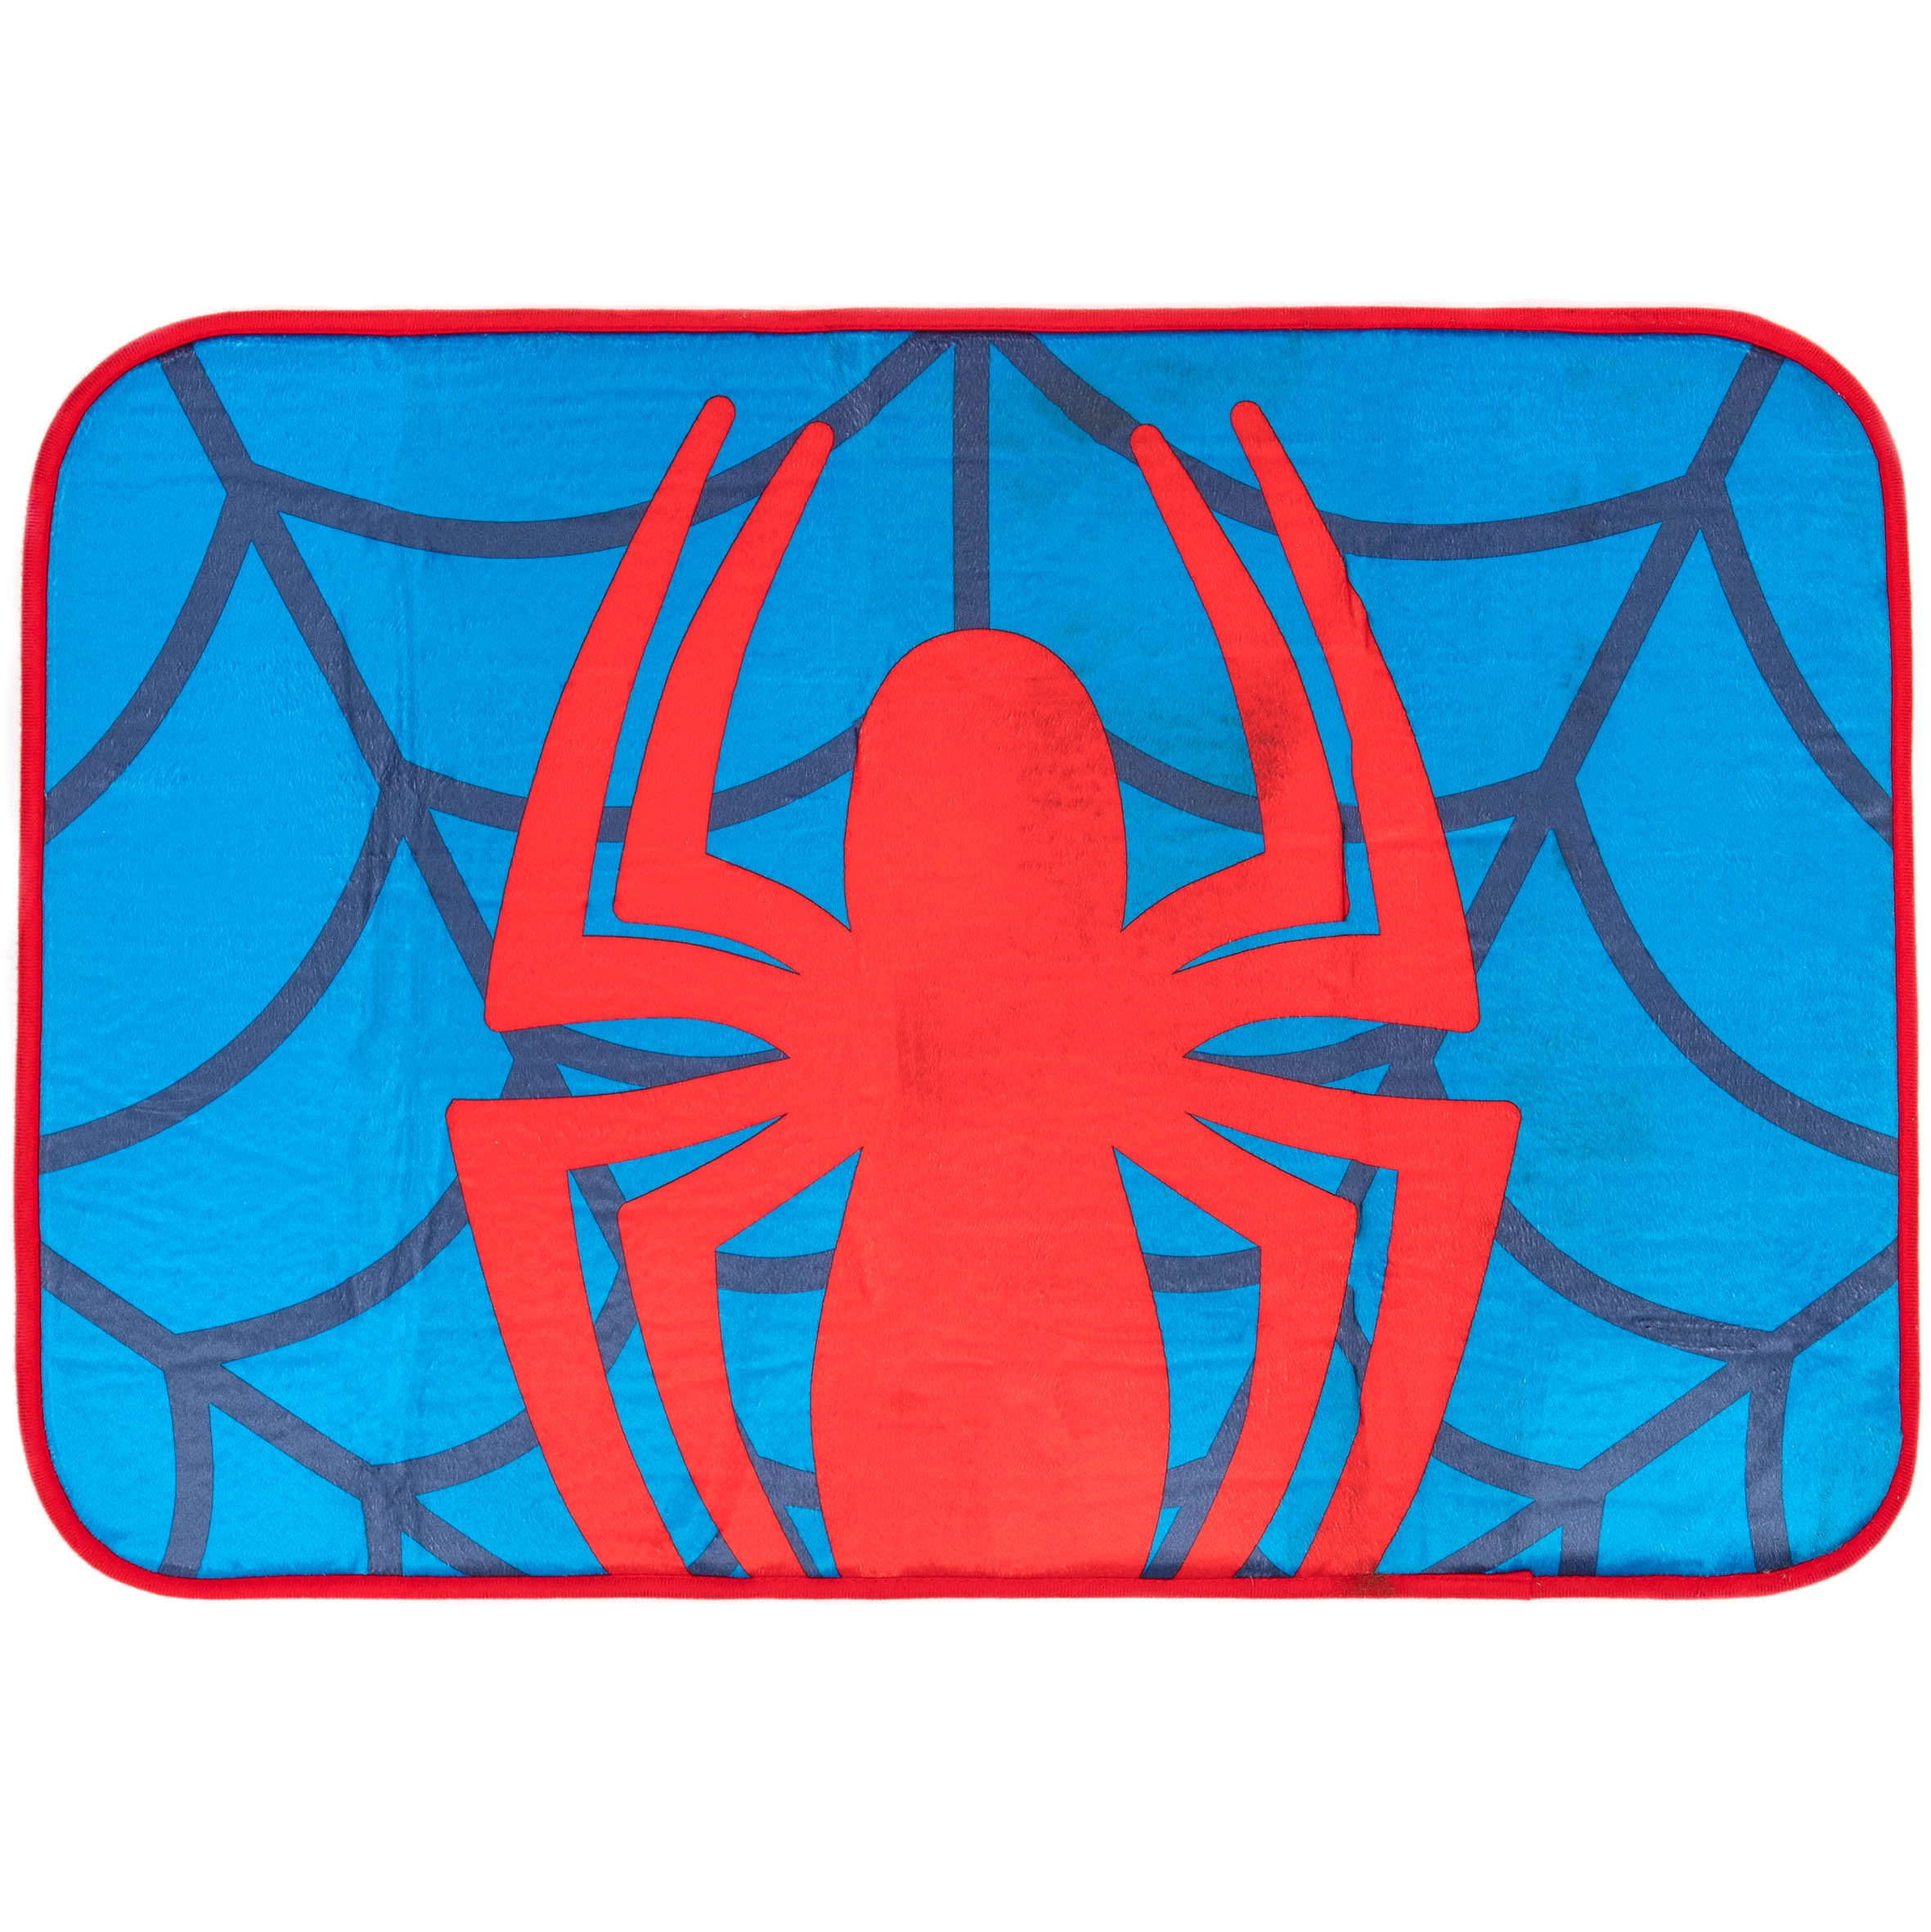 Marvel Spiderman Red and Blue Foam Bath Rug 1 Each 